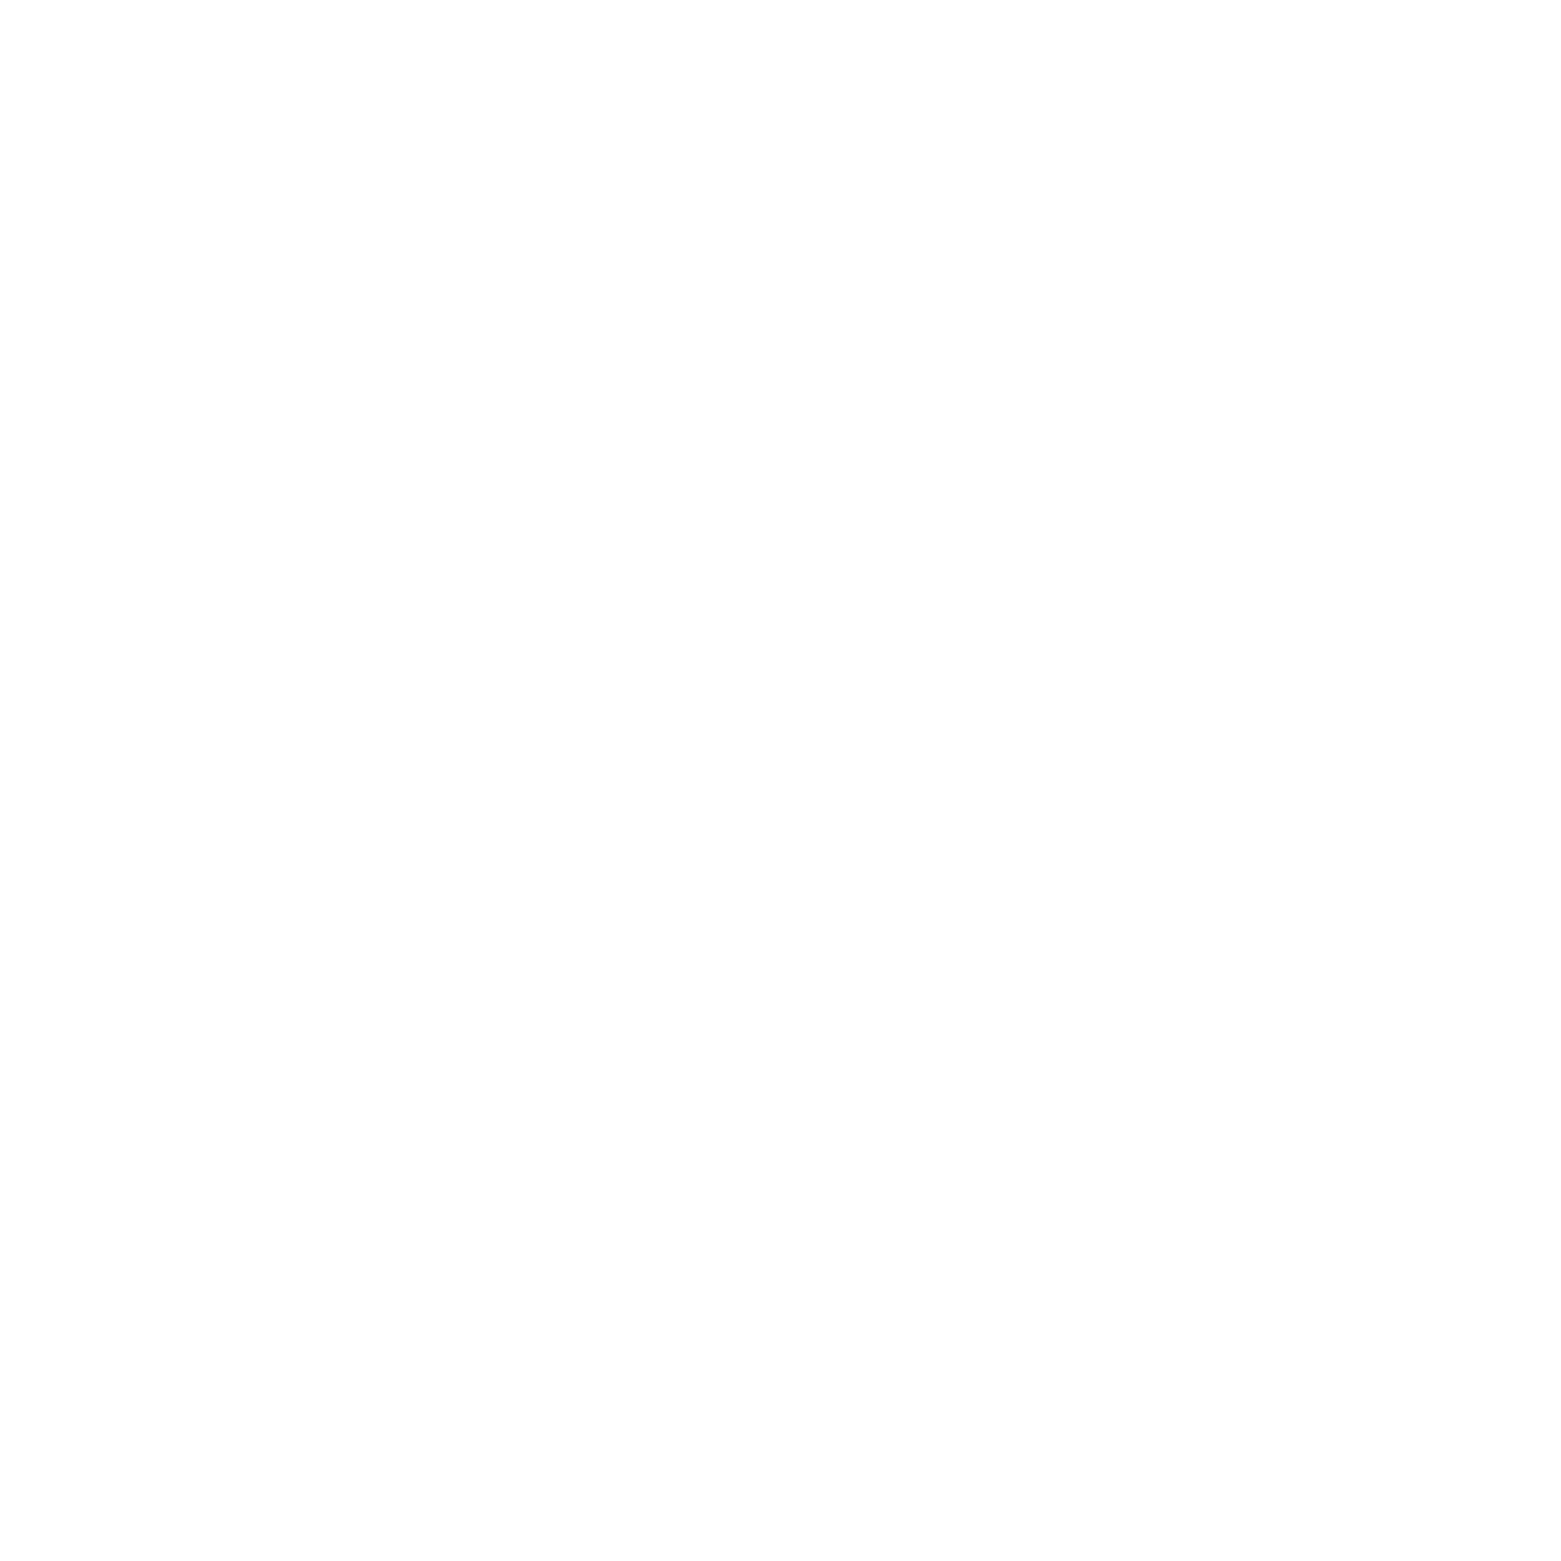 Habitant Productions